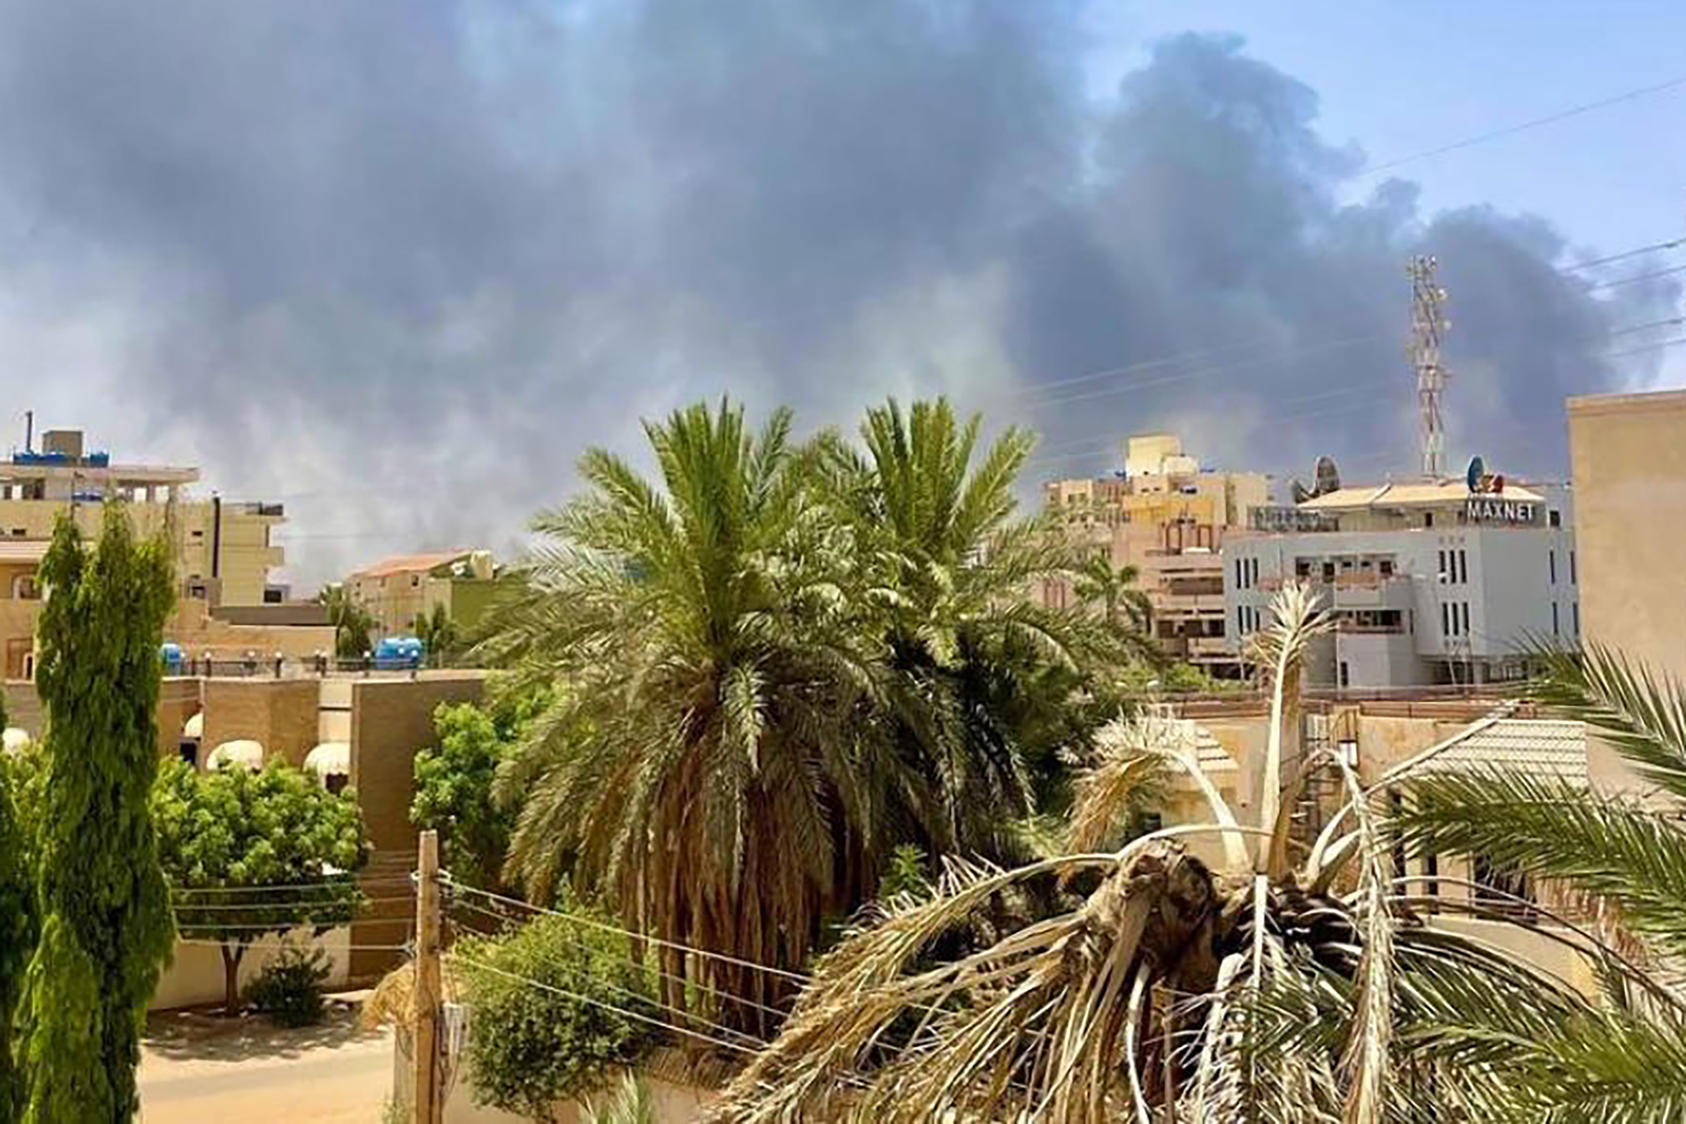 Smoke rises following a bombing in the Al-Tayif neighbourhood of Khartoum, Sudan